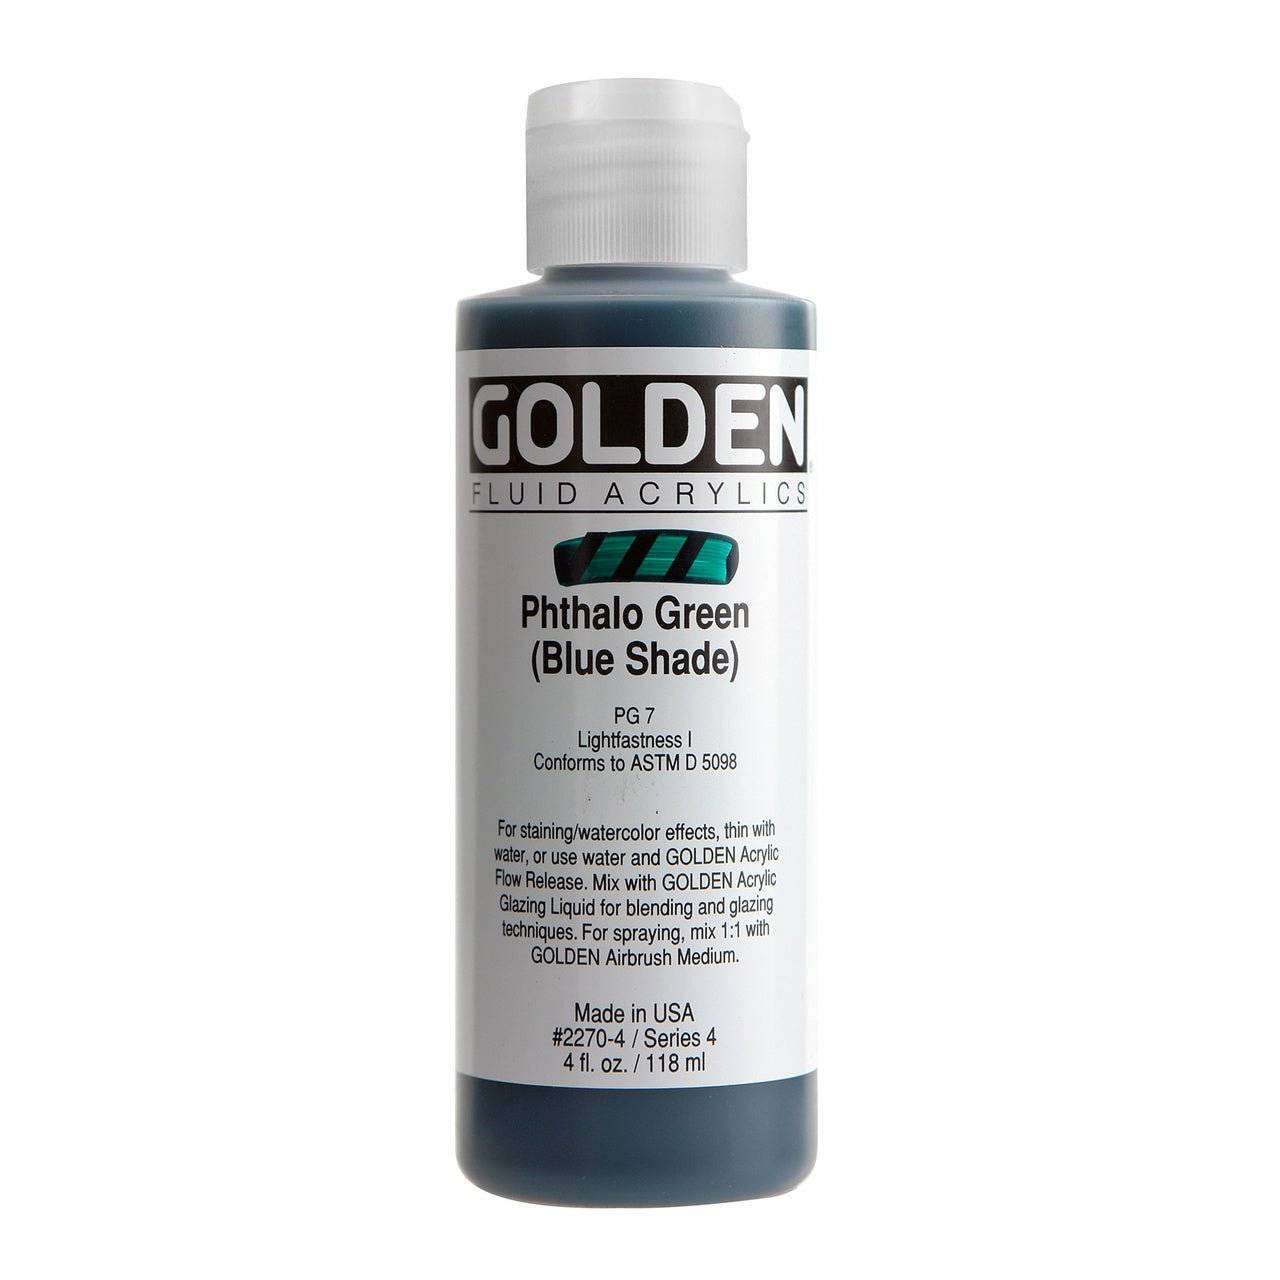 Golden Fluid Acrylic Phthalo Green (blue shade) 4 oz - merriartist.com